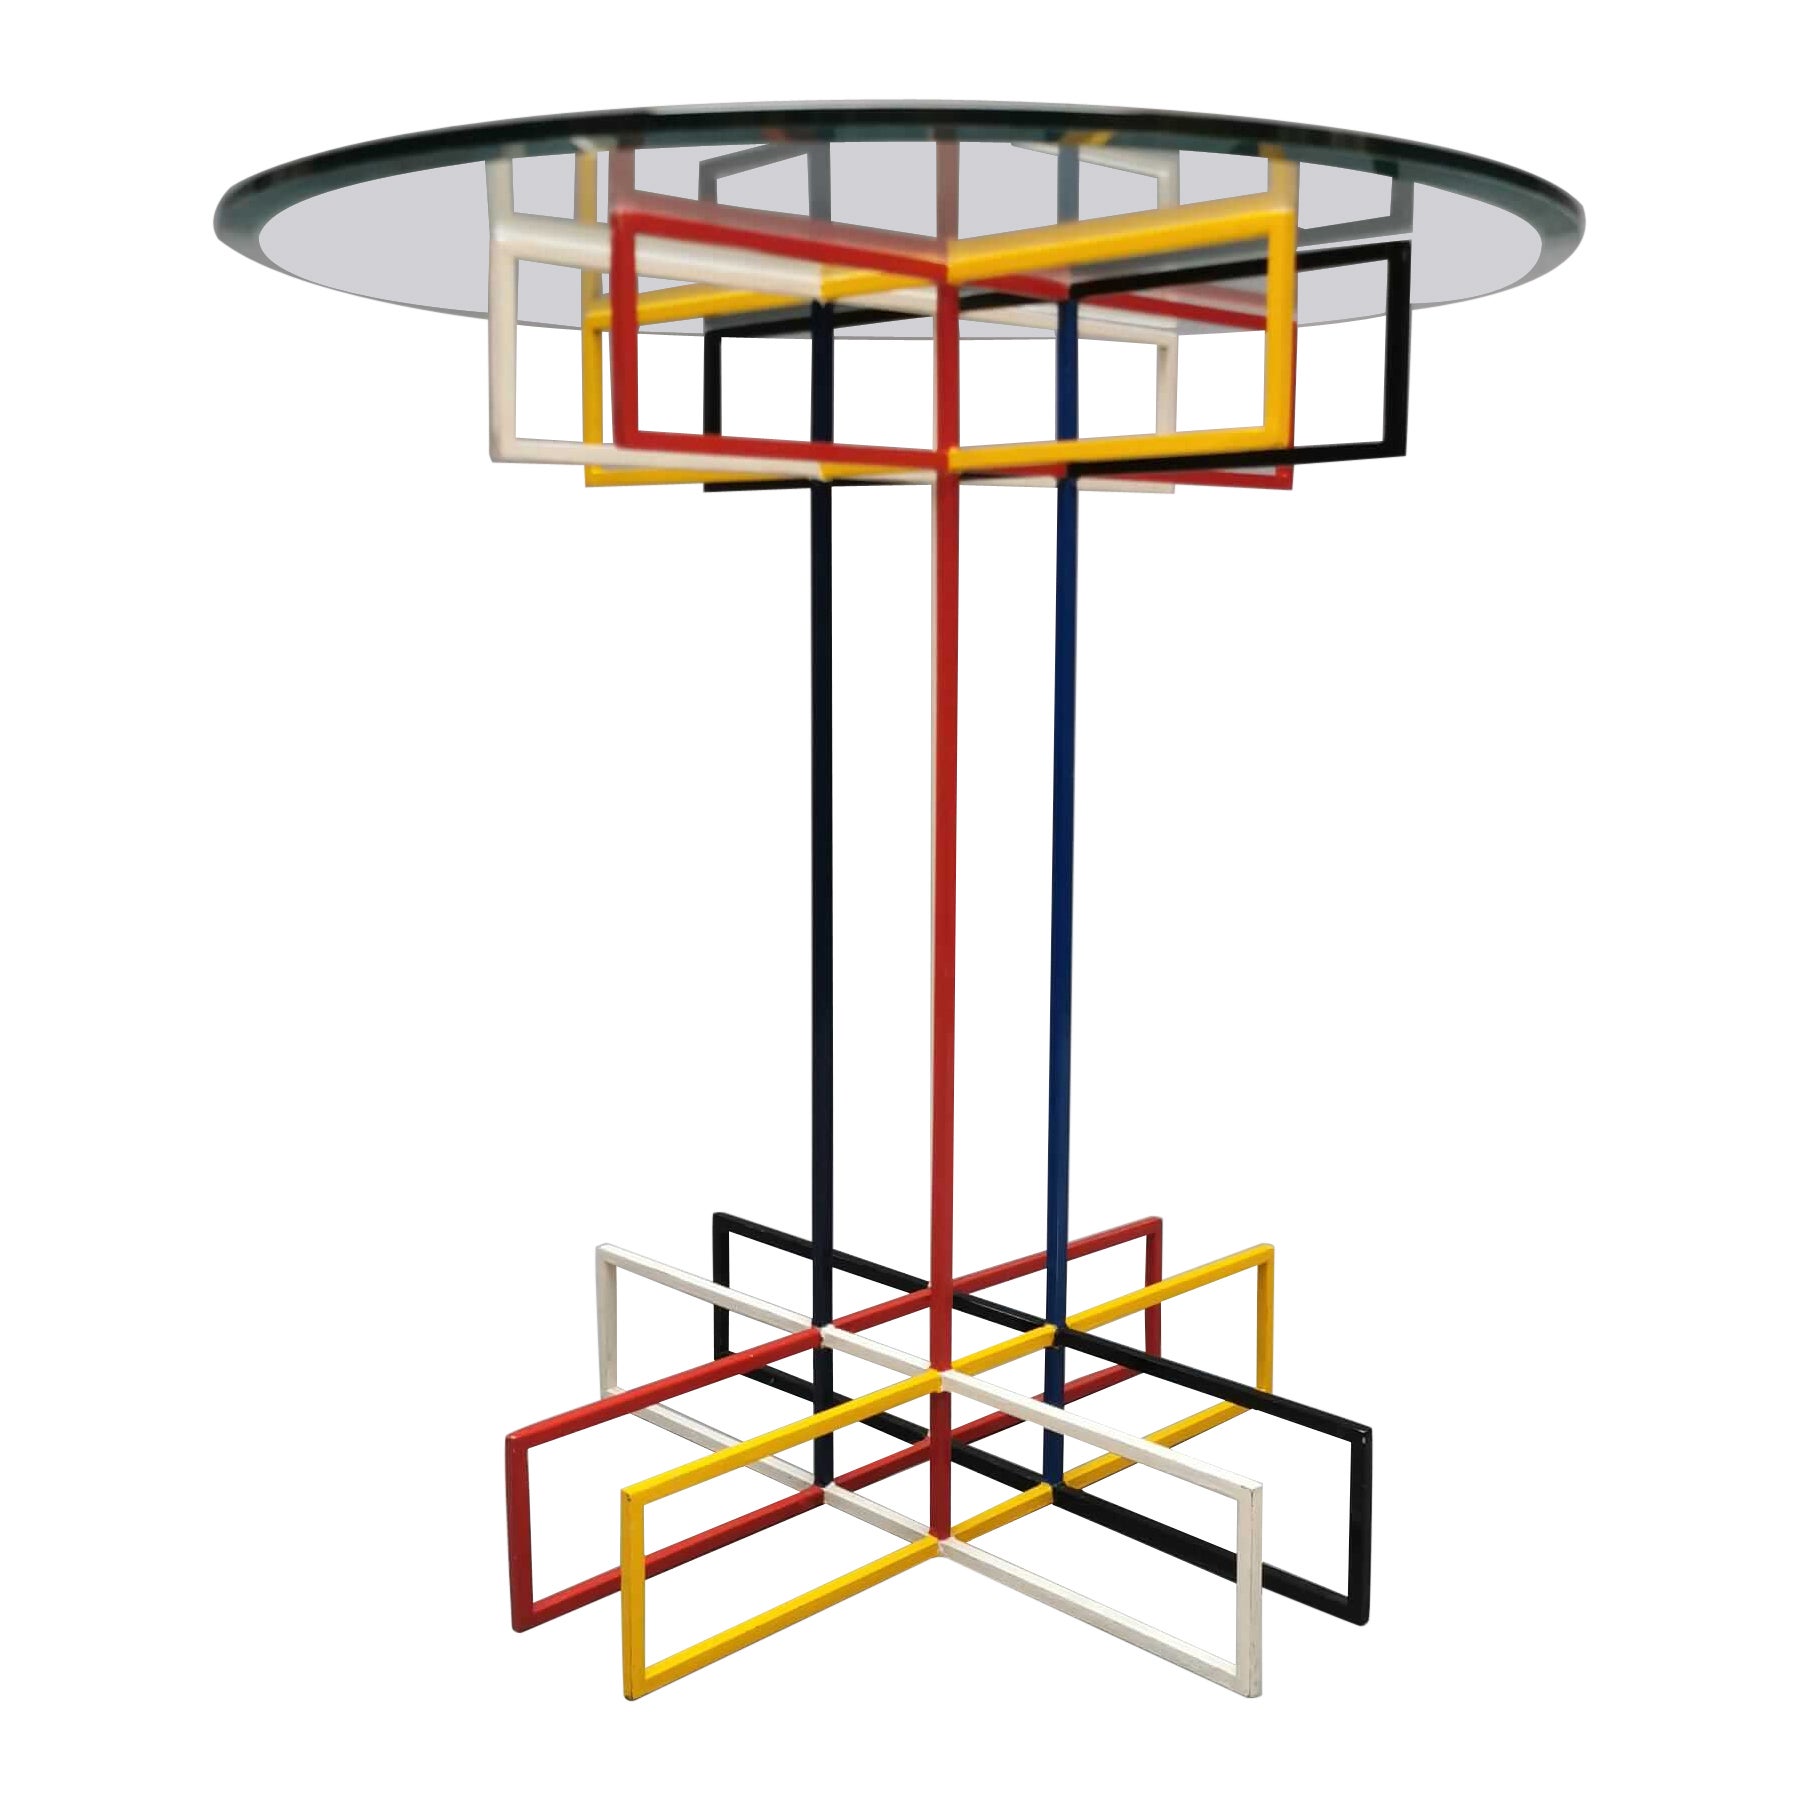 Mondrian Style Table